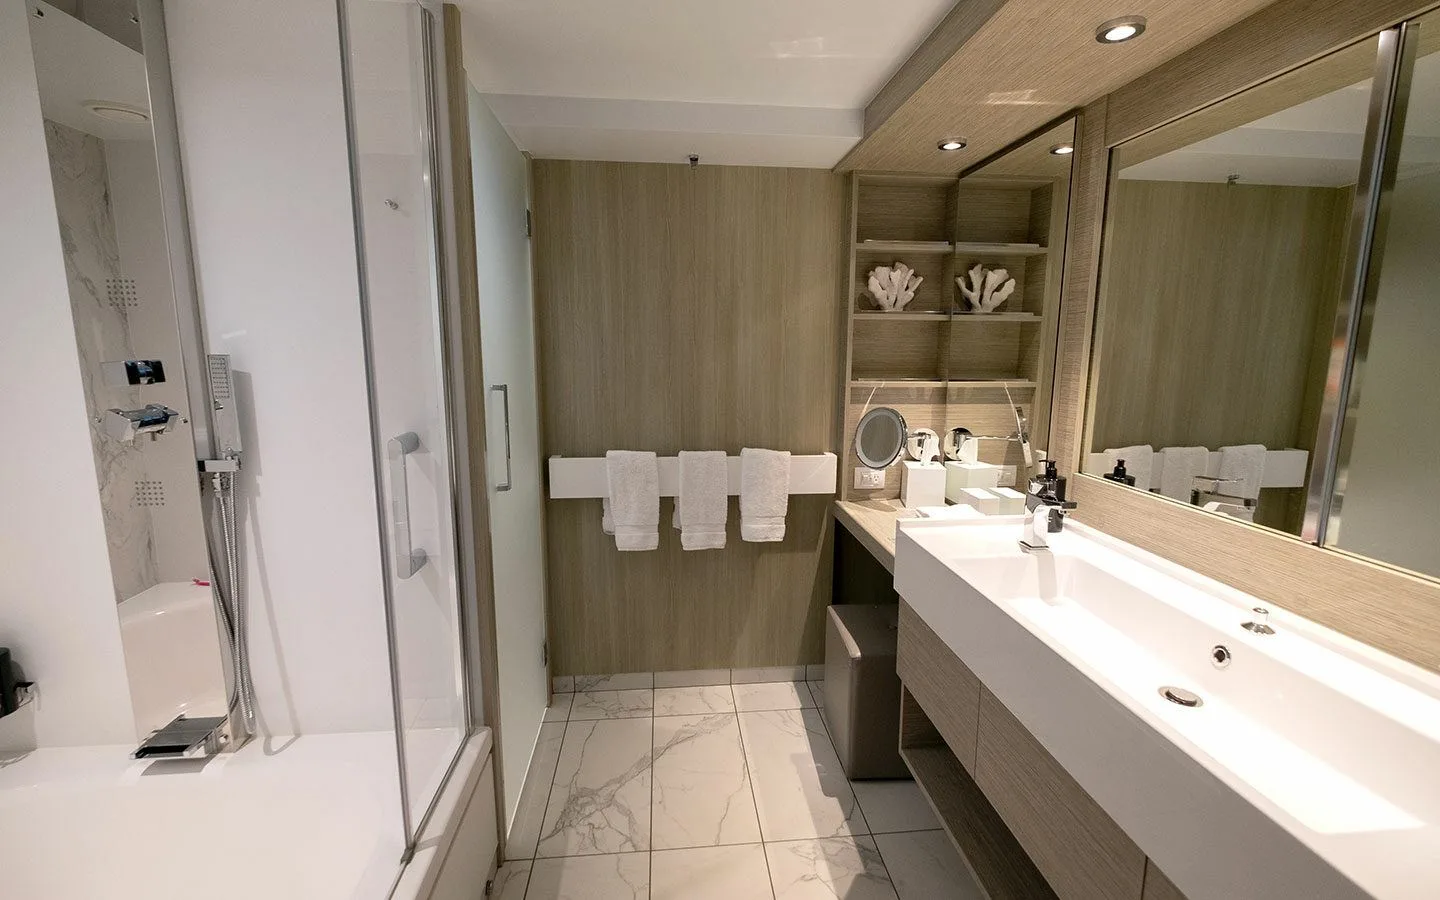 Our Sky Suite stateroom bathroom on Celebrity Apex